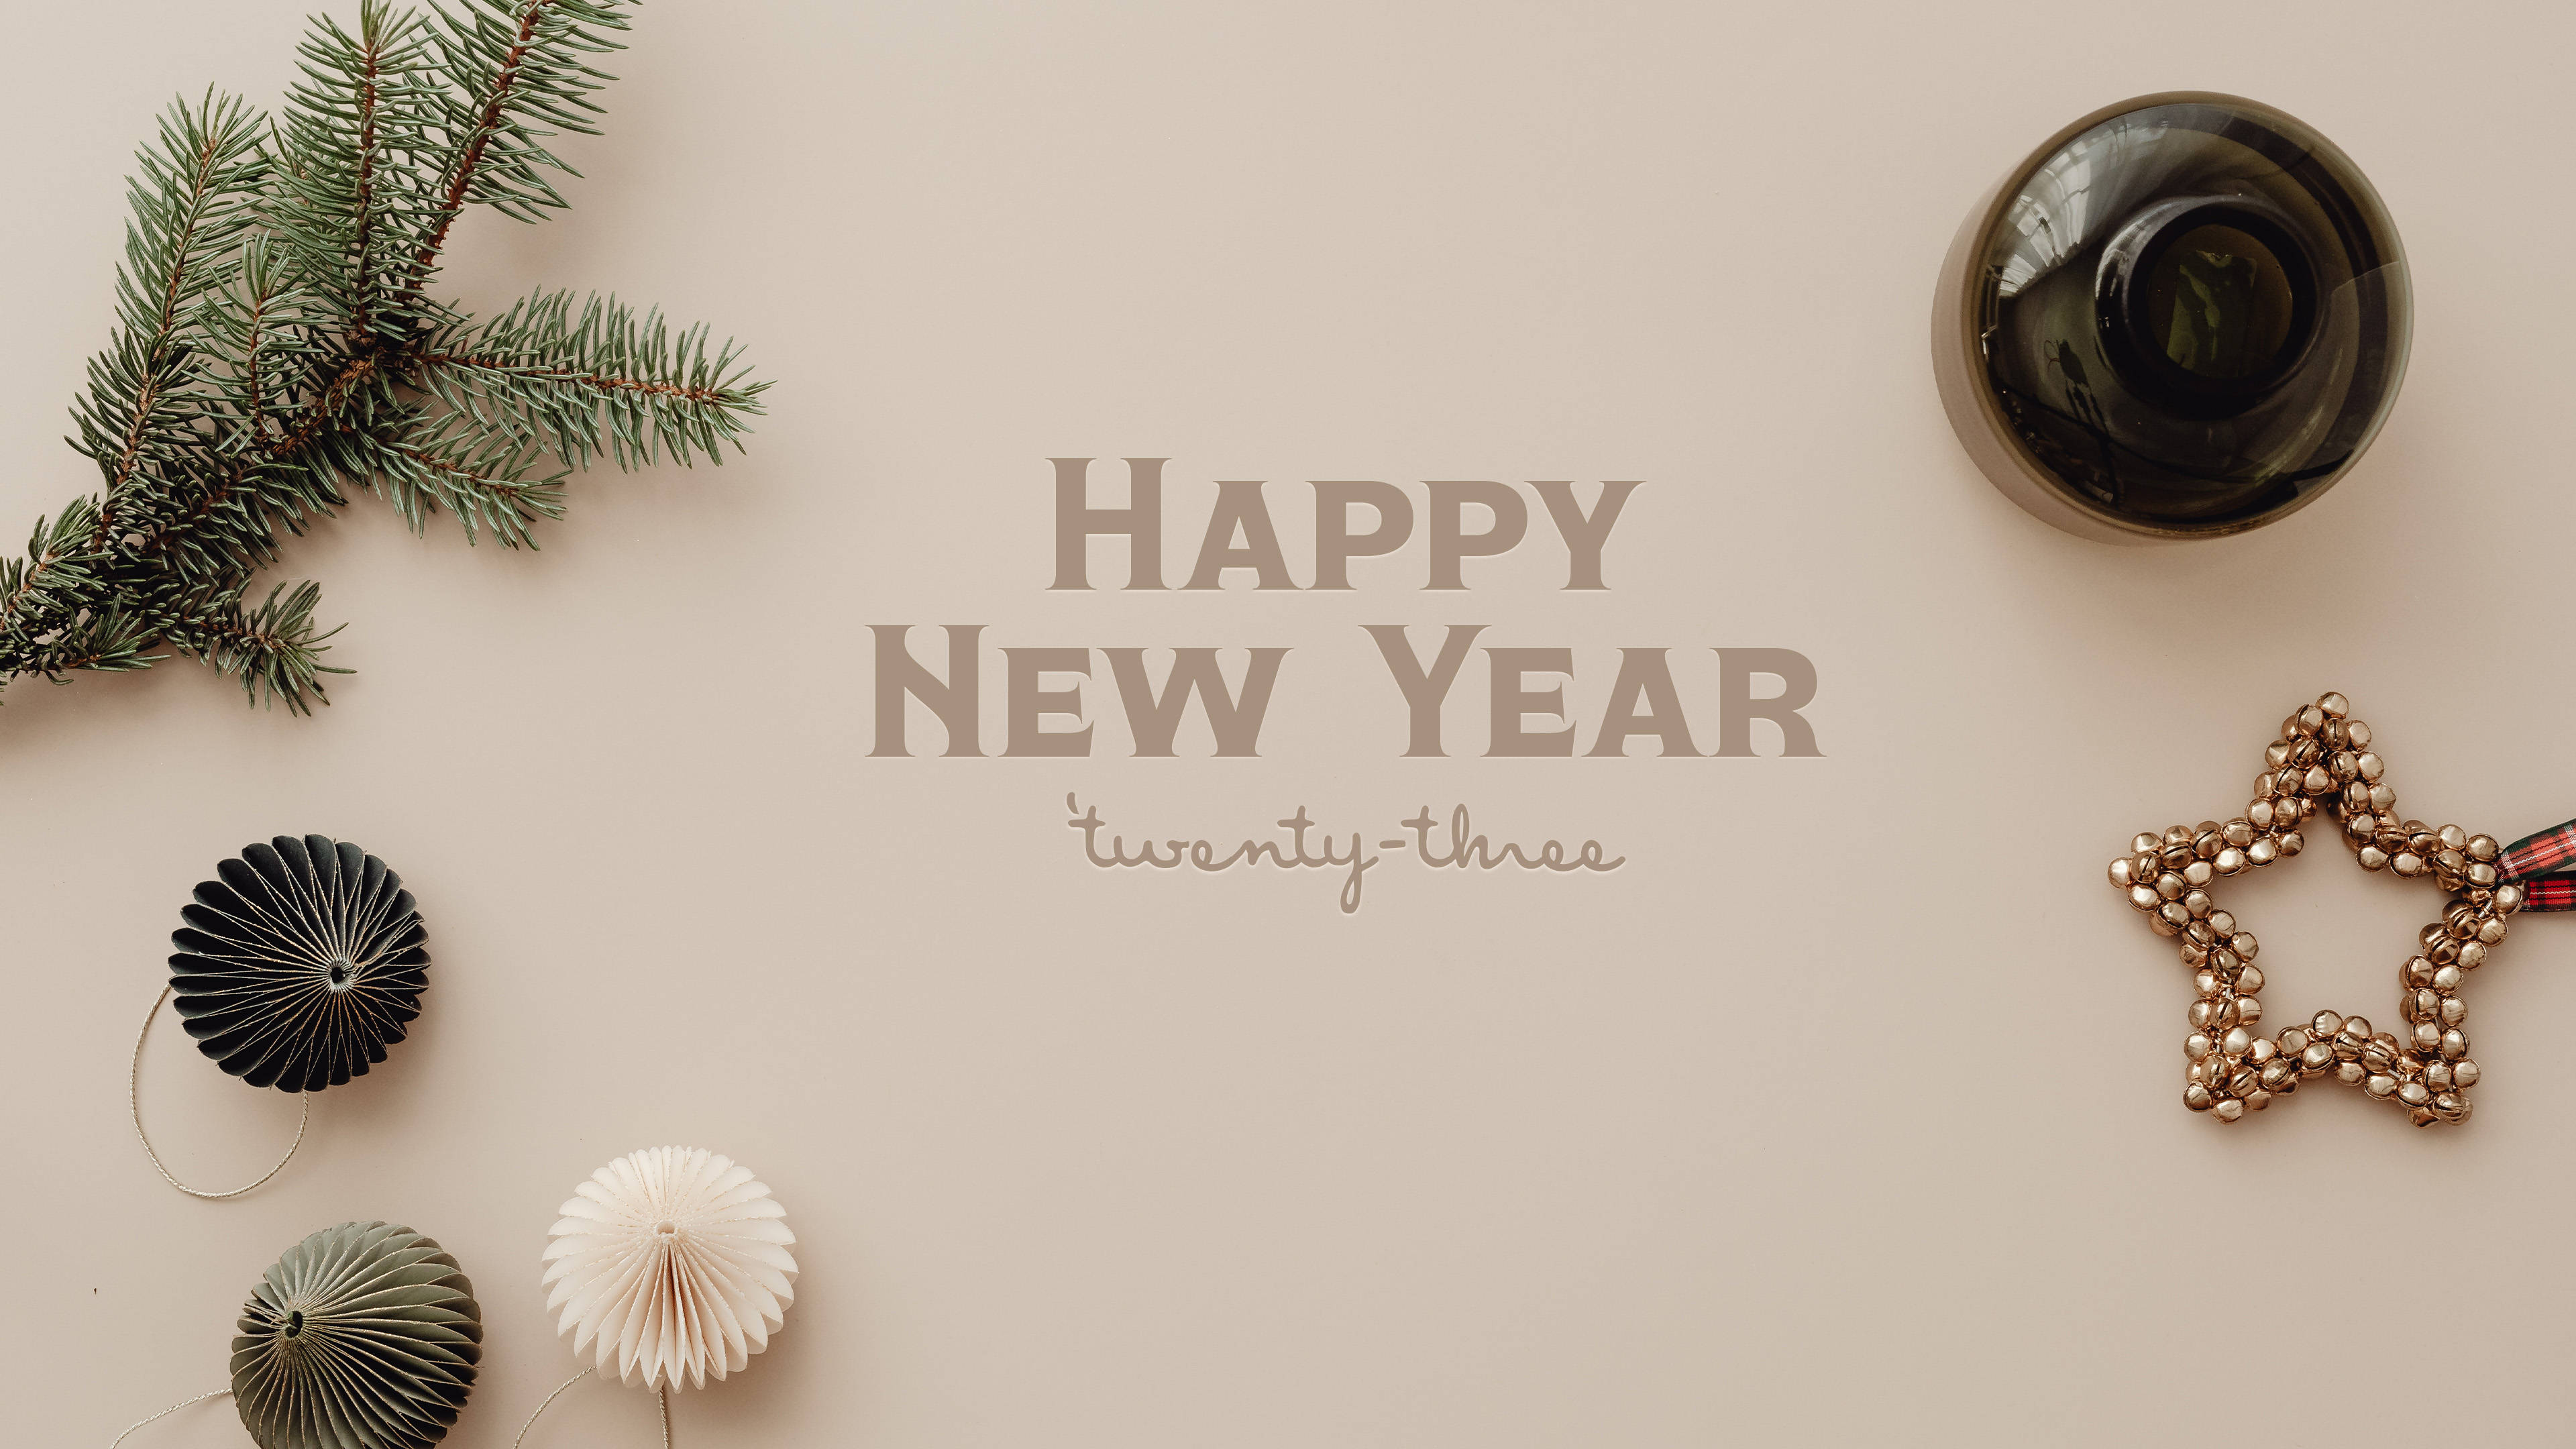 Free Happy New Year Wallpaper Downloads, [200+] Happy New Year Wallpapers  for FREE 